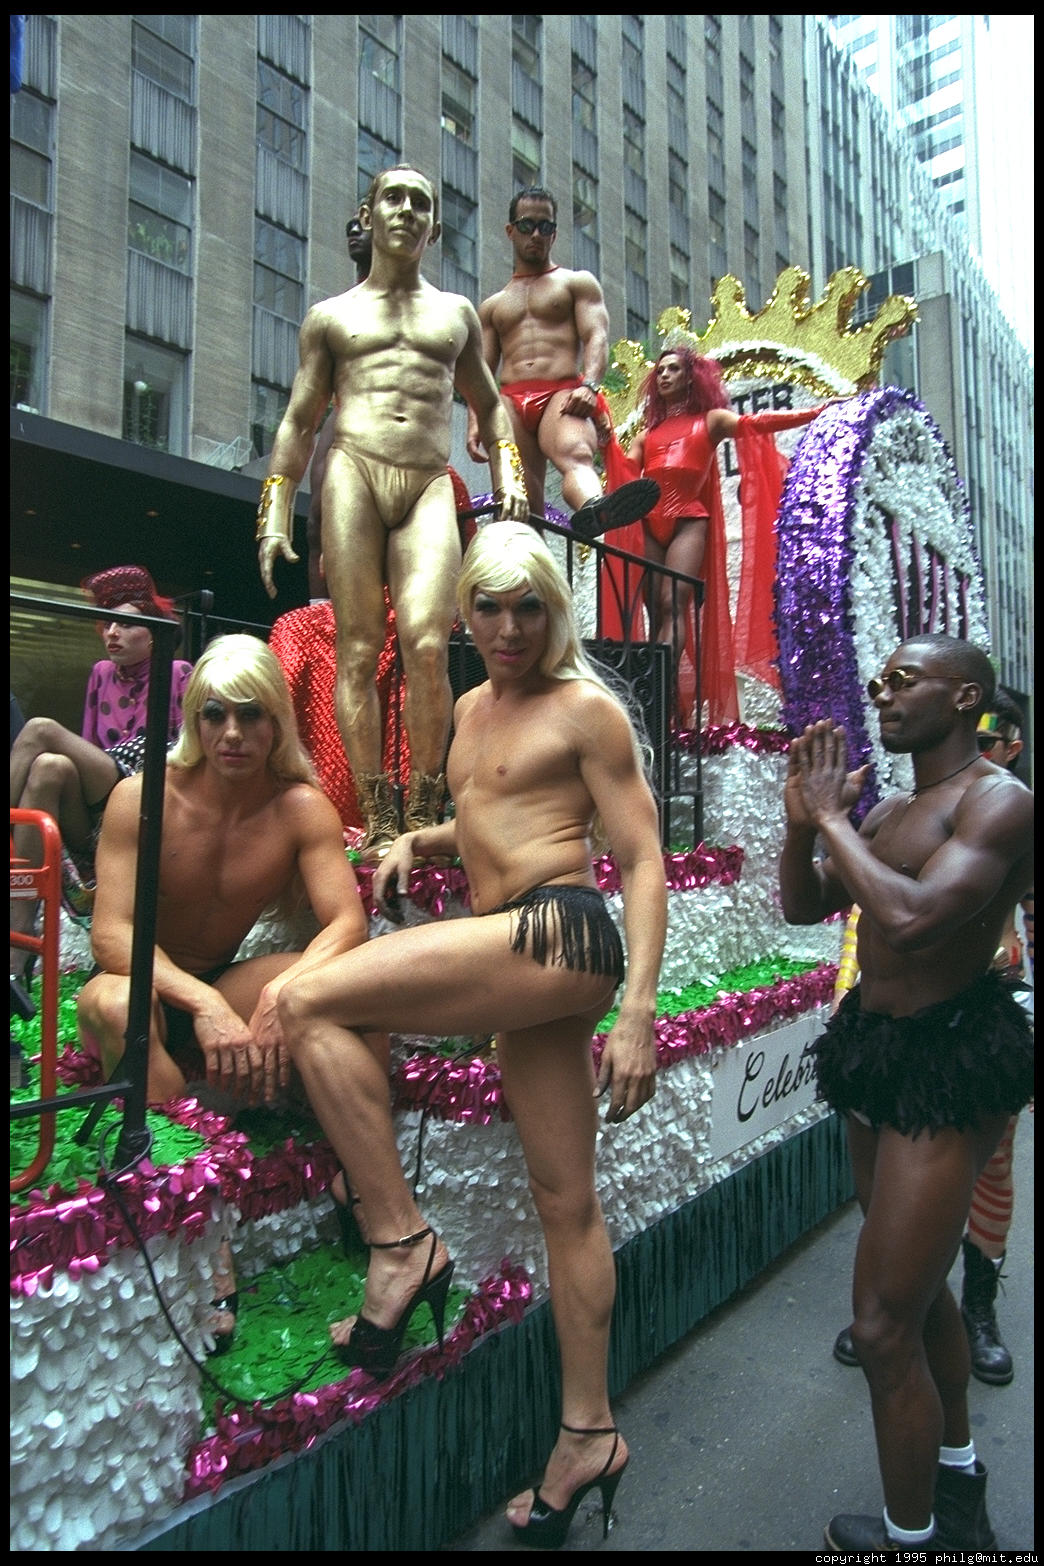 Forum Image: http://3.bp.blogspot.com/_Bxu2kHSW6aw/TC-CXPDRTGI/AAAAAAAAEks/-RxOy0t1_jE/s1600/New+York+Pride.jpg